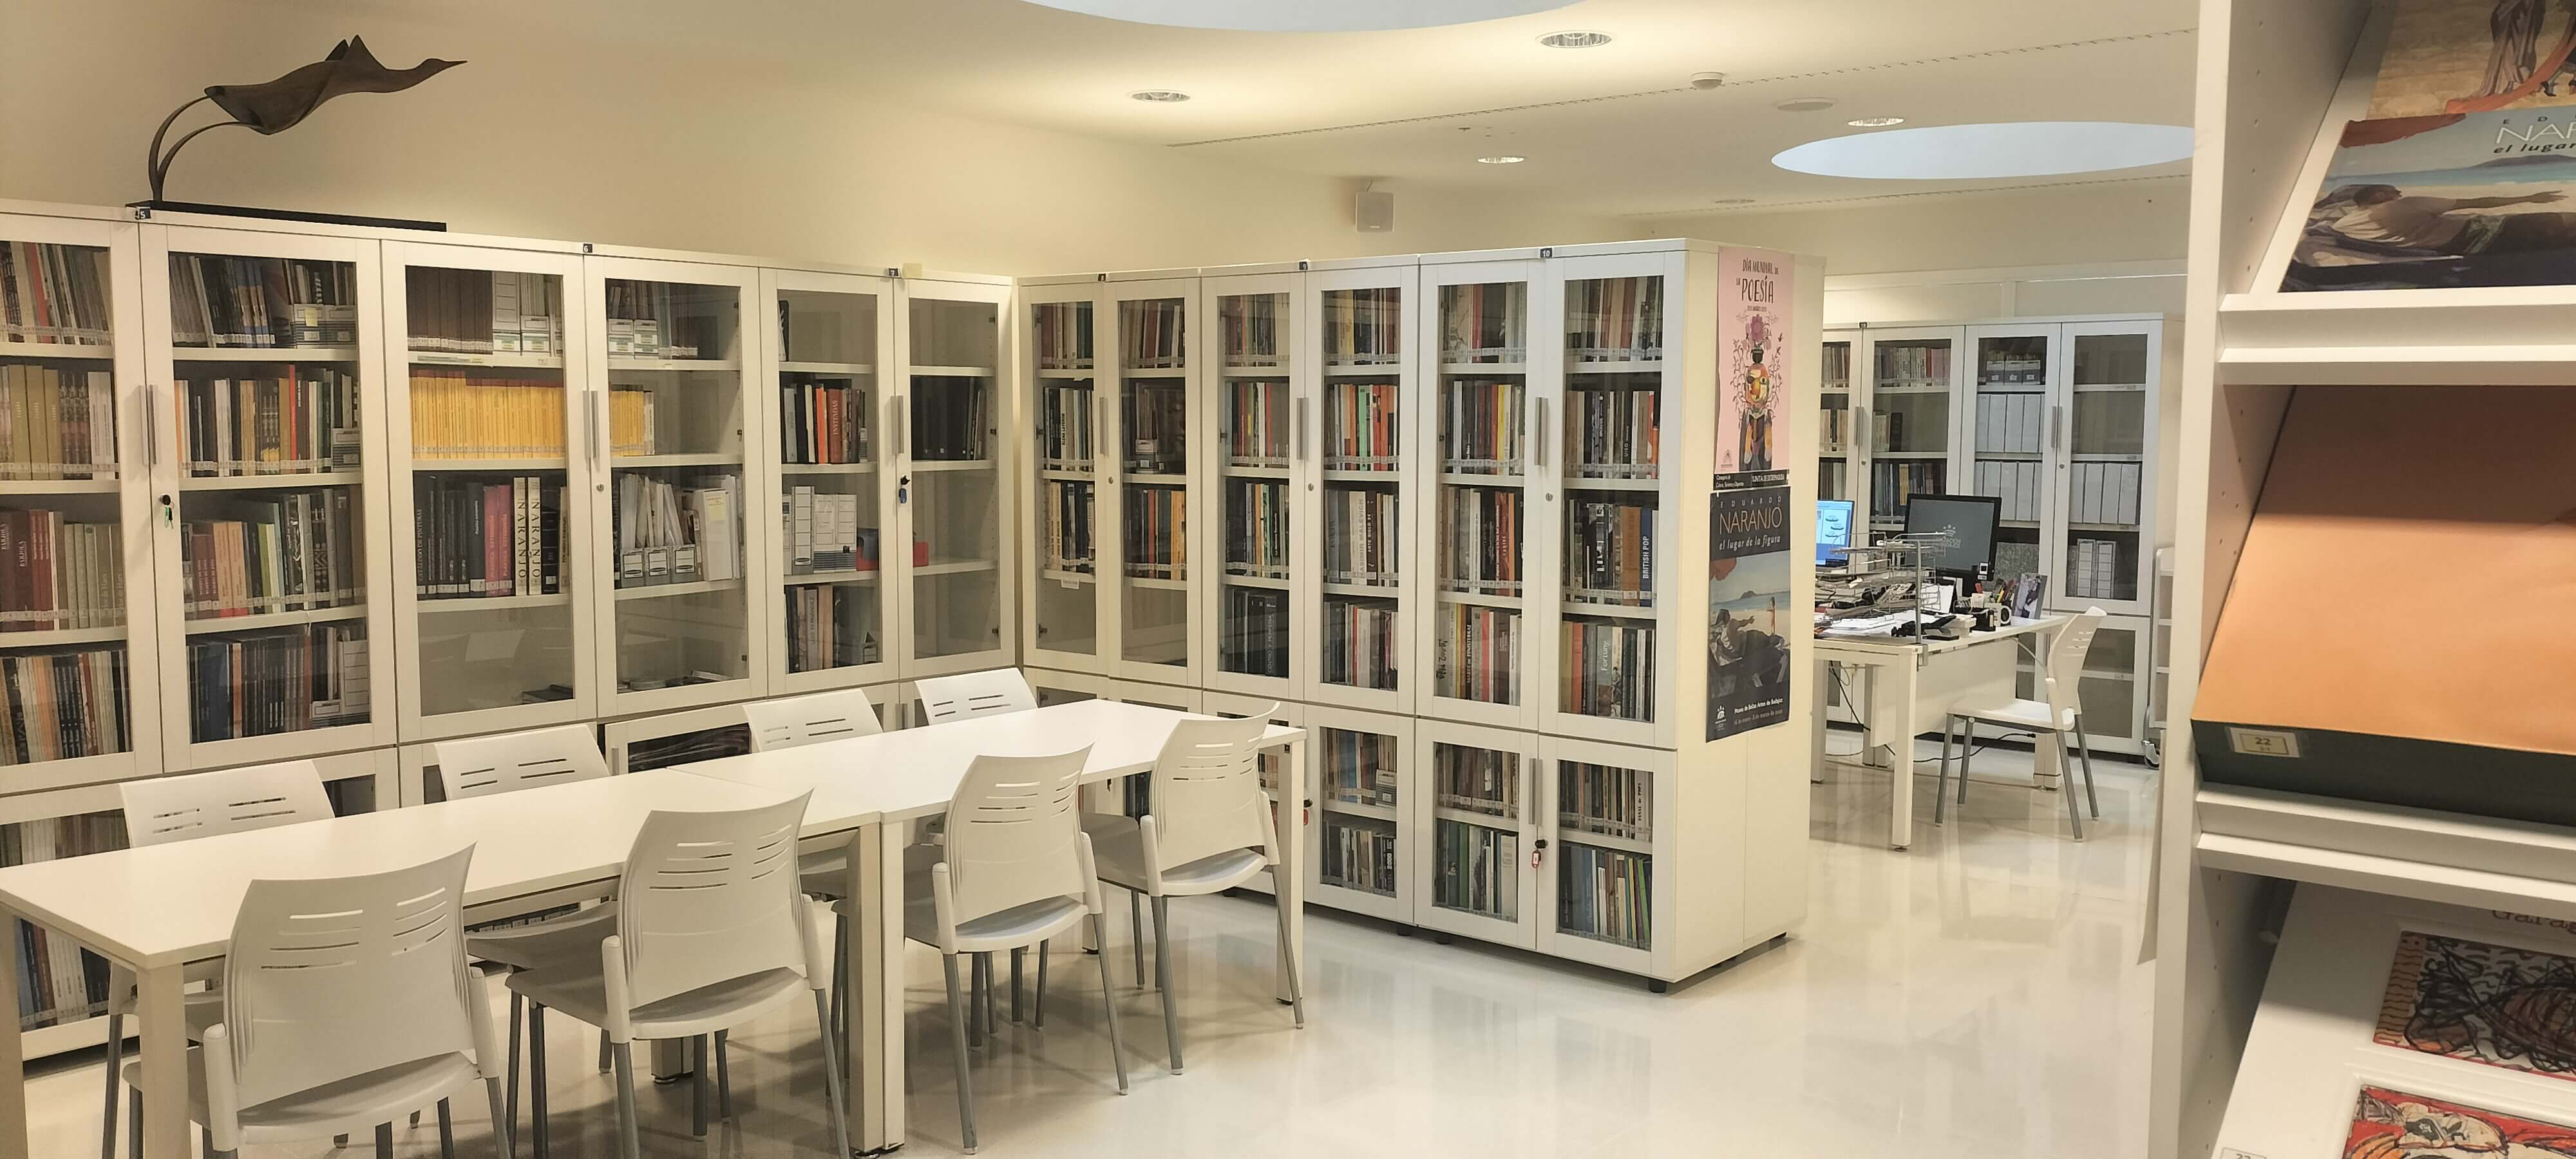 Biblioteca MUBA